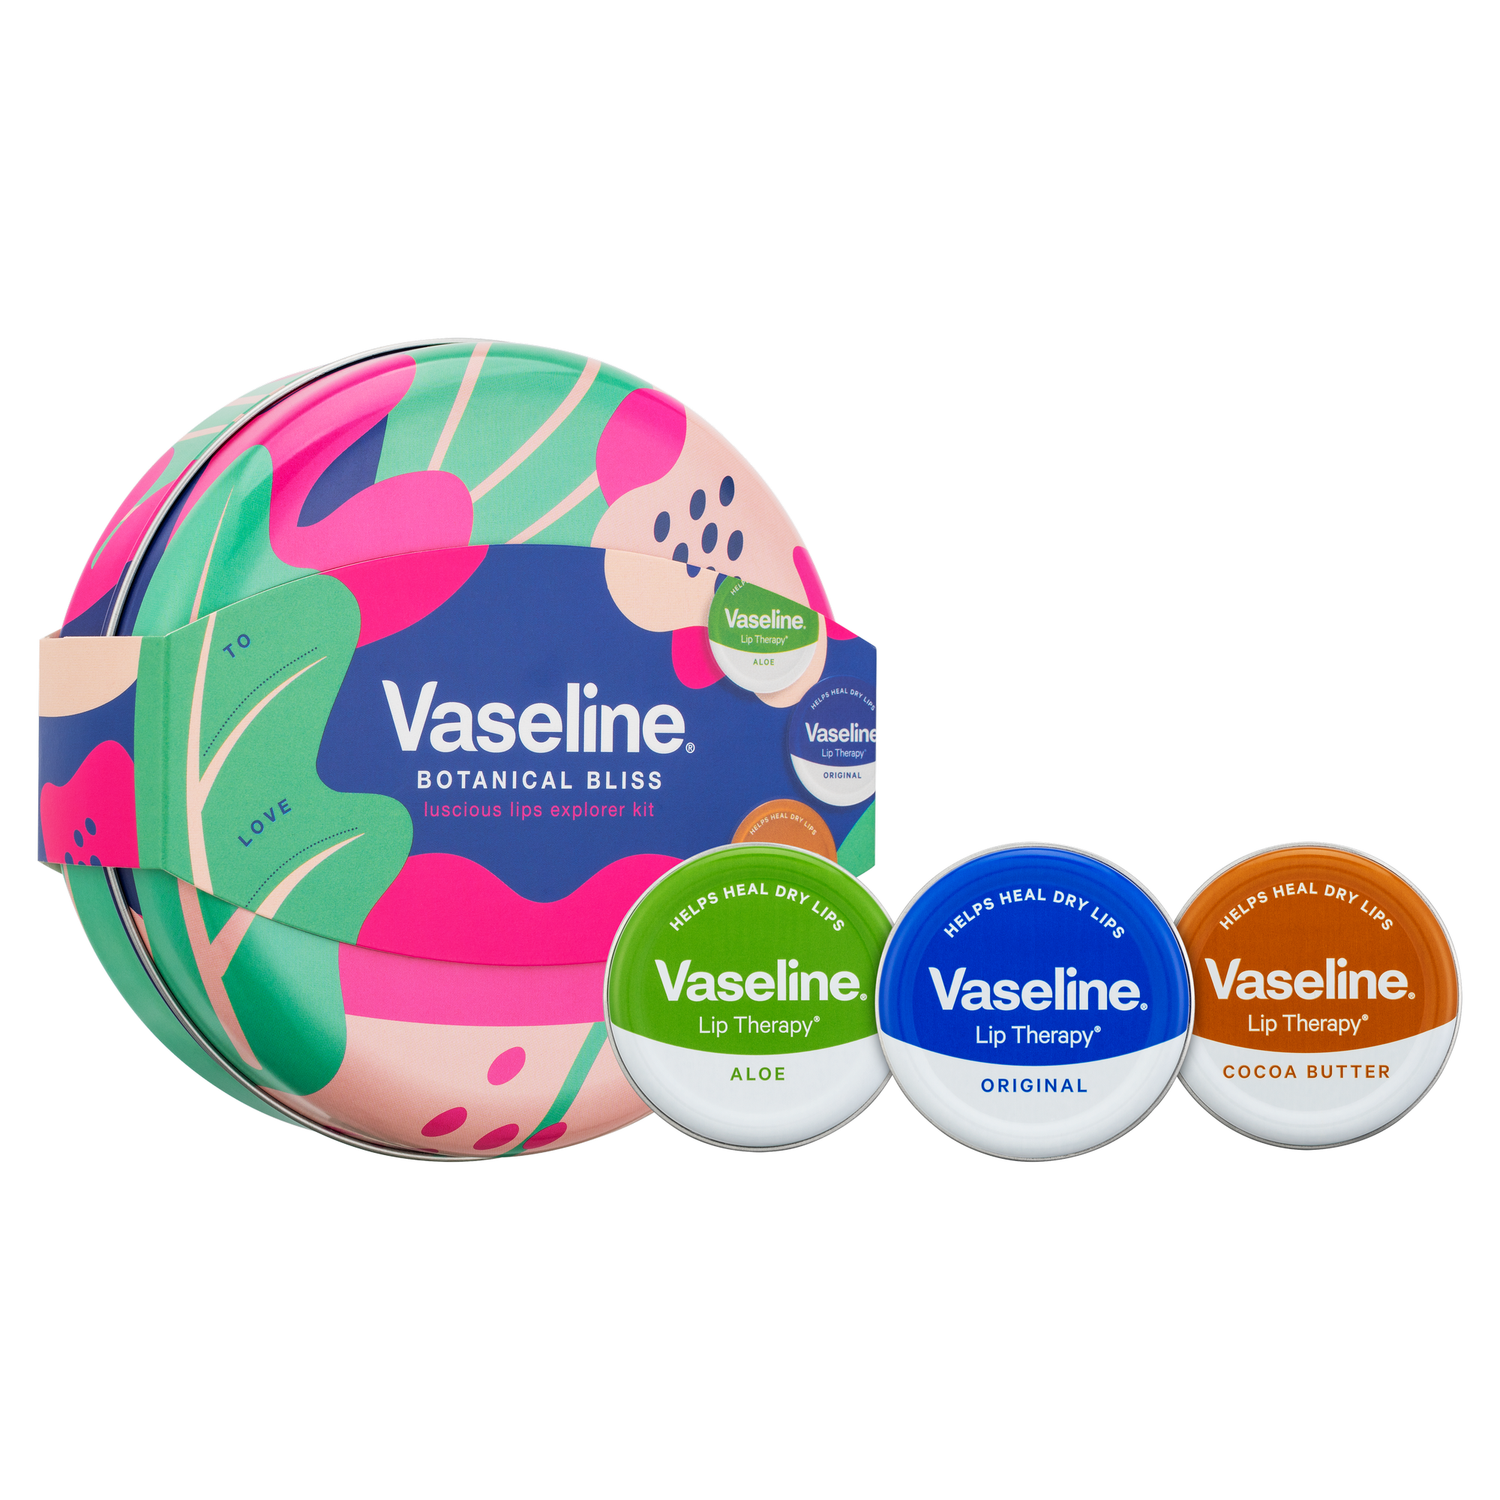 Vaseline Luscious Lips Explorer 3 Piece Set